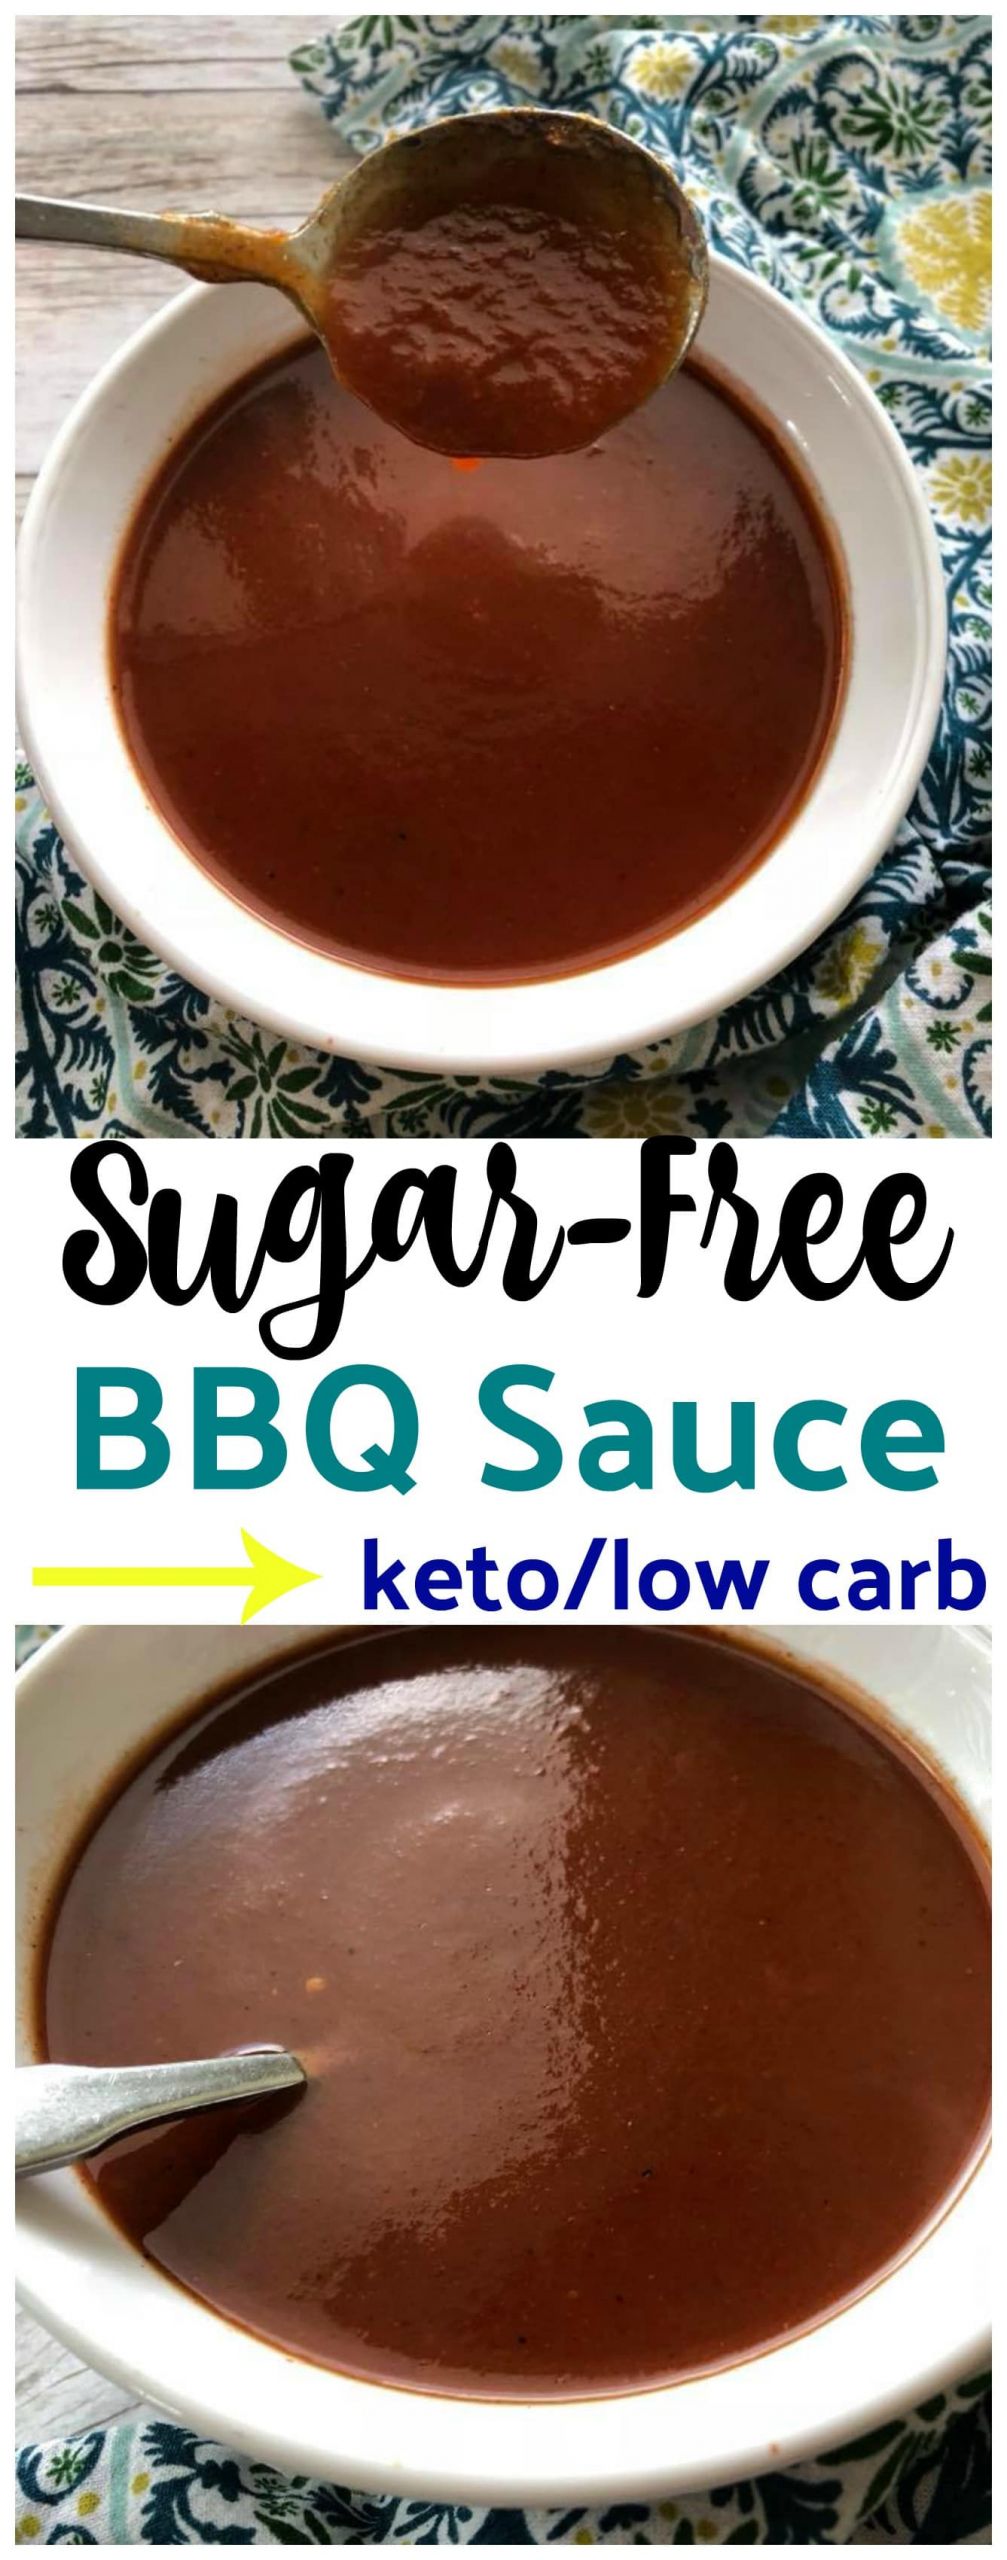 Low Calorie Bbq Sauce Recipe
 Homemade Low Carb Sugar Free BBQ Sauce keto friendly